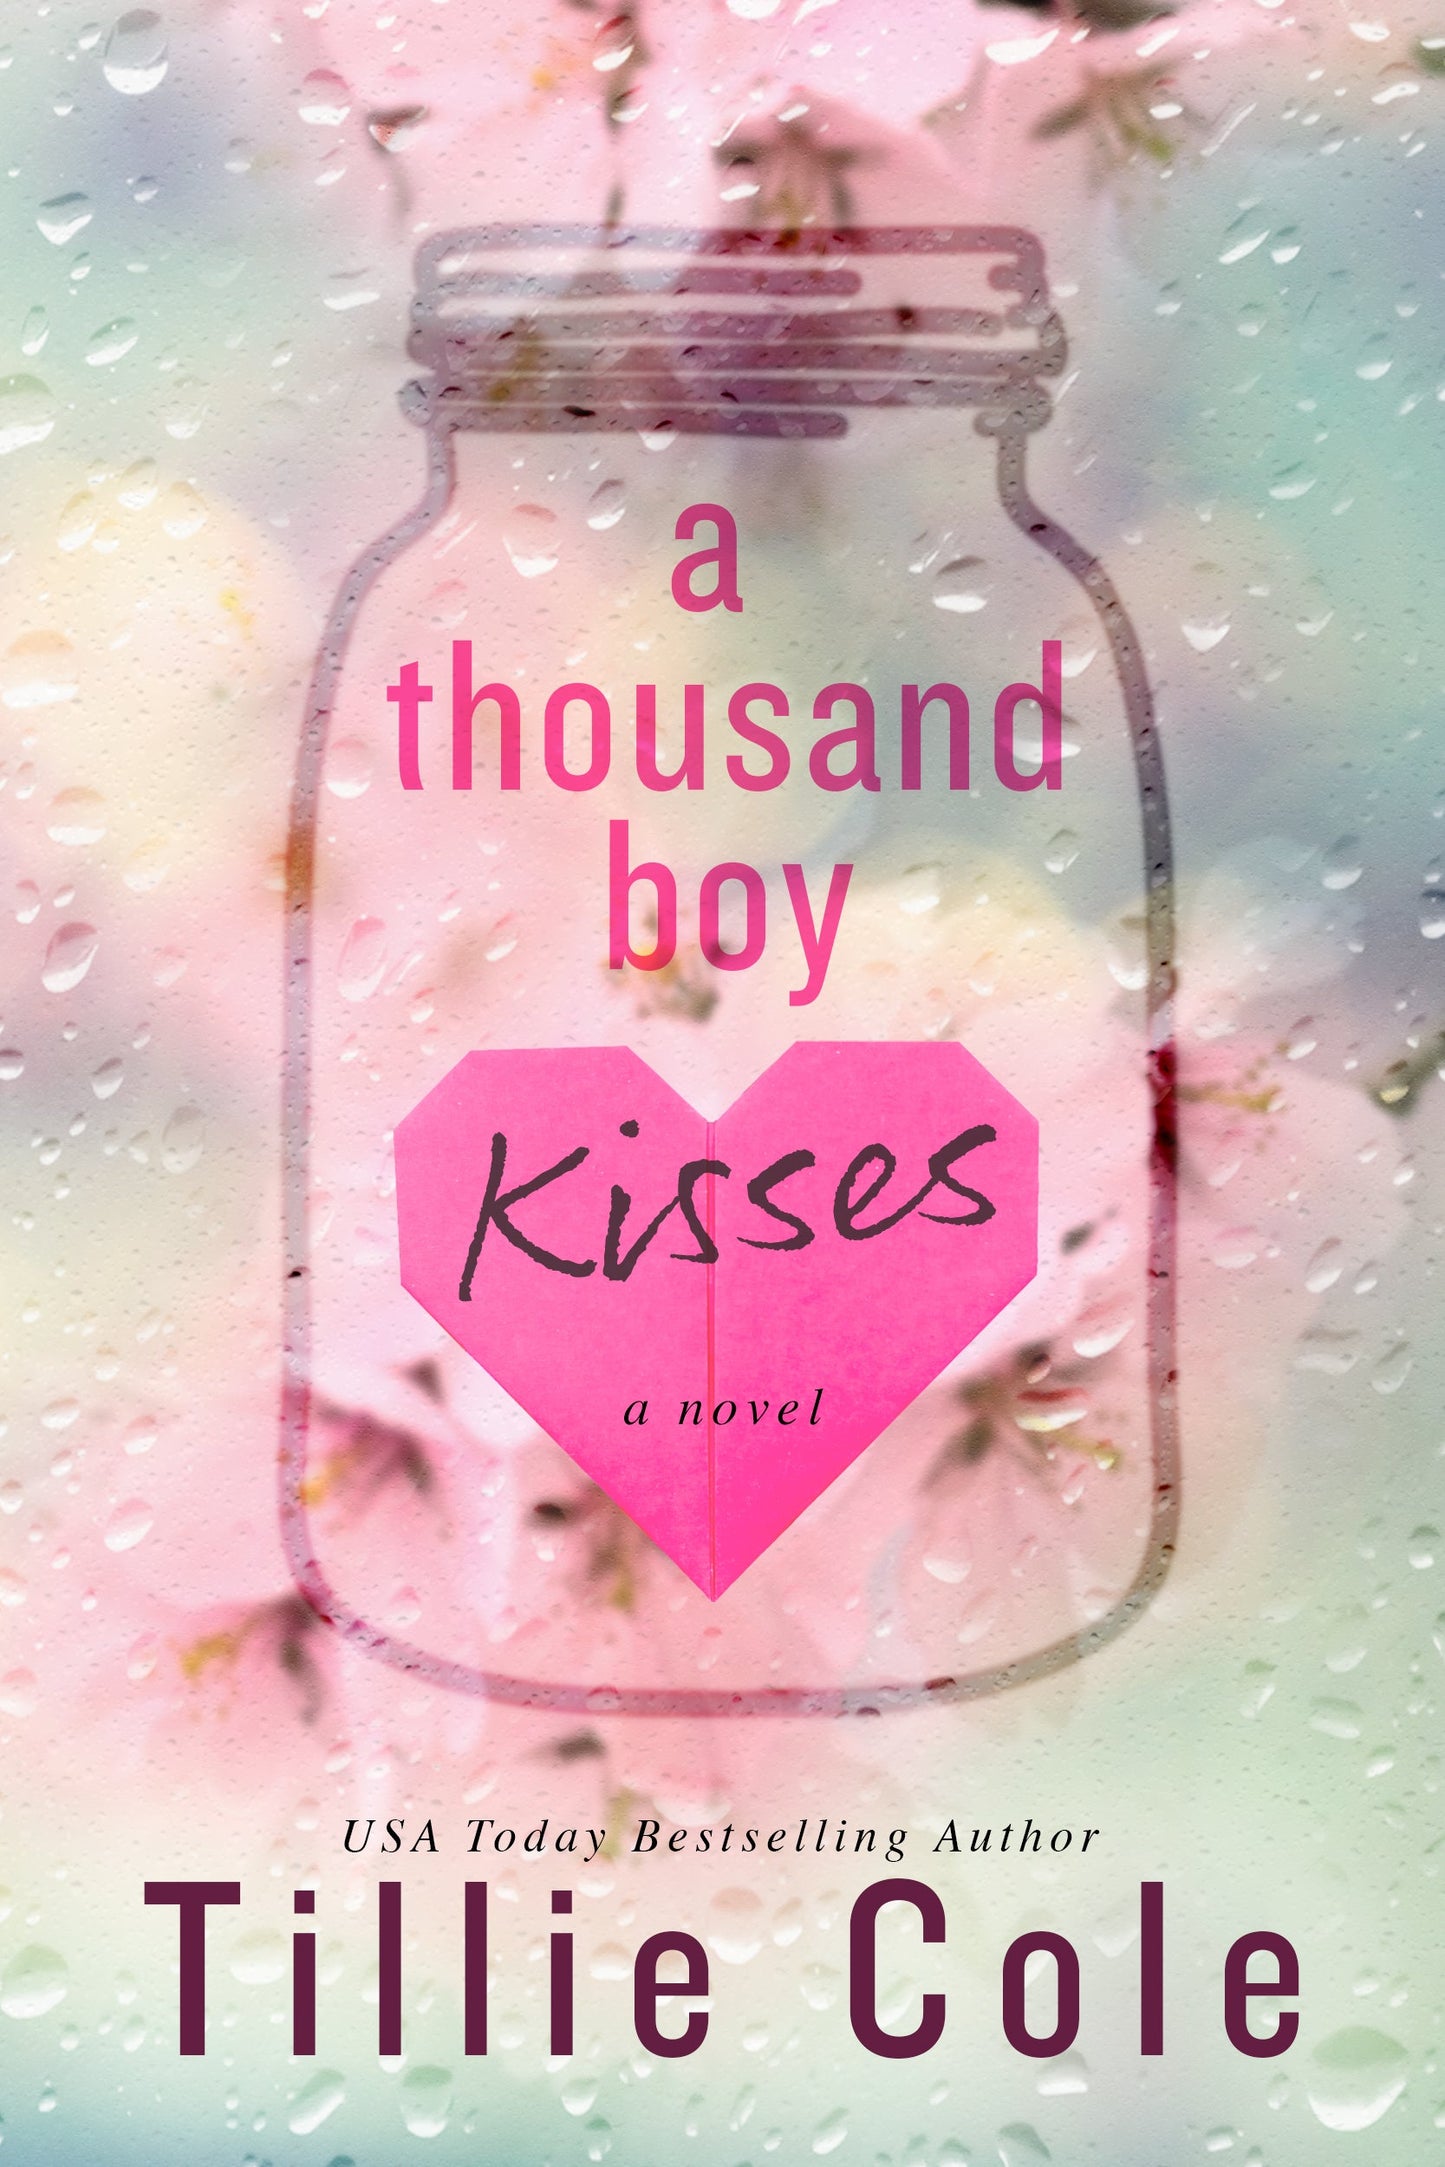 A Thousand Boy Kisses